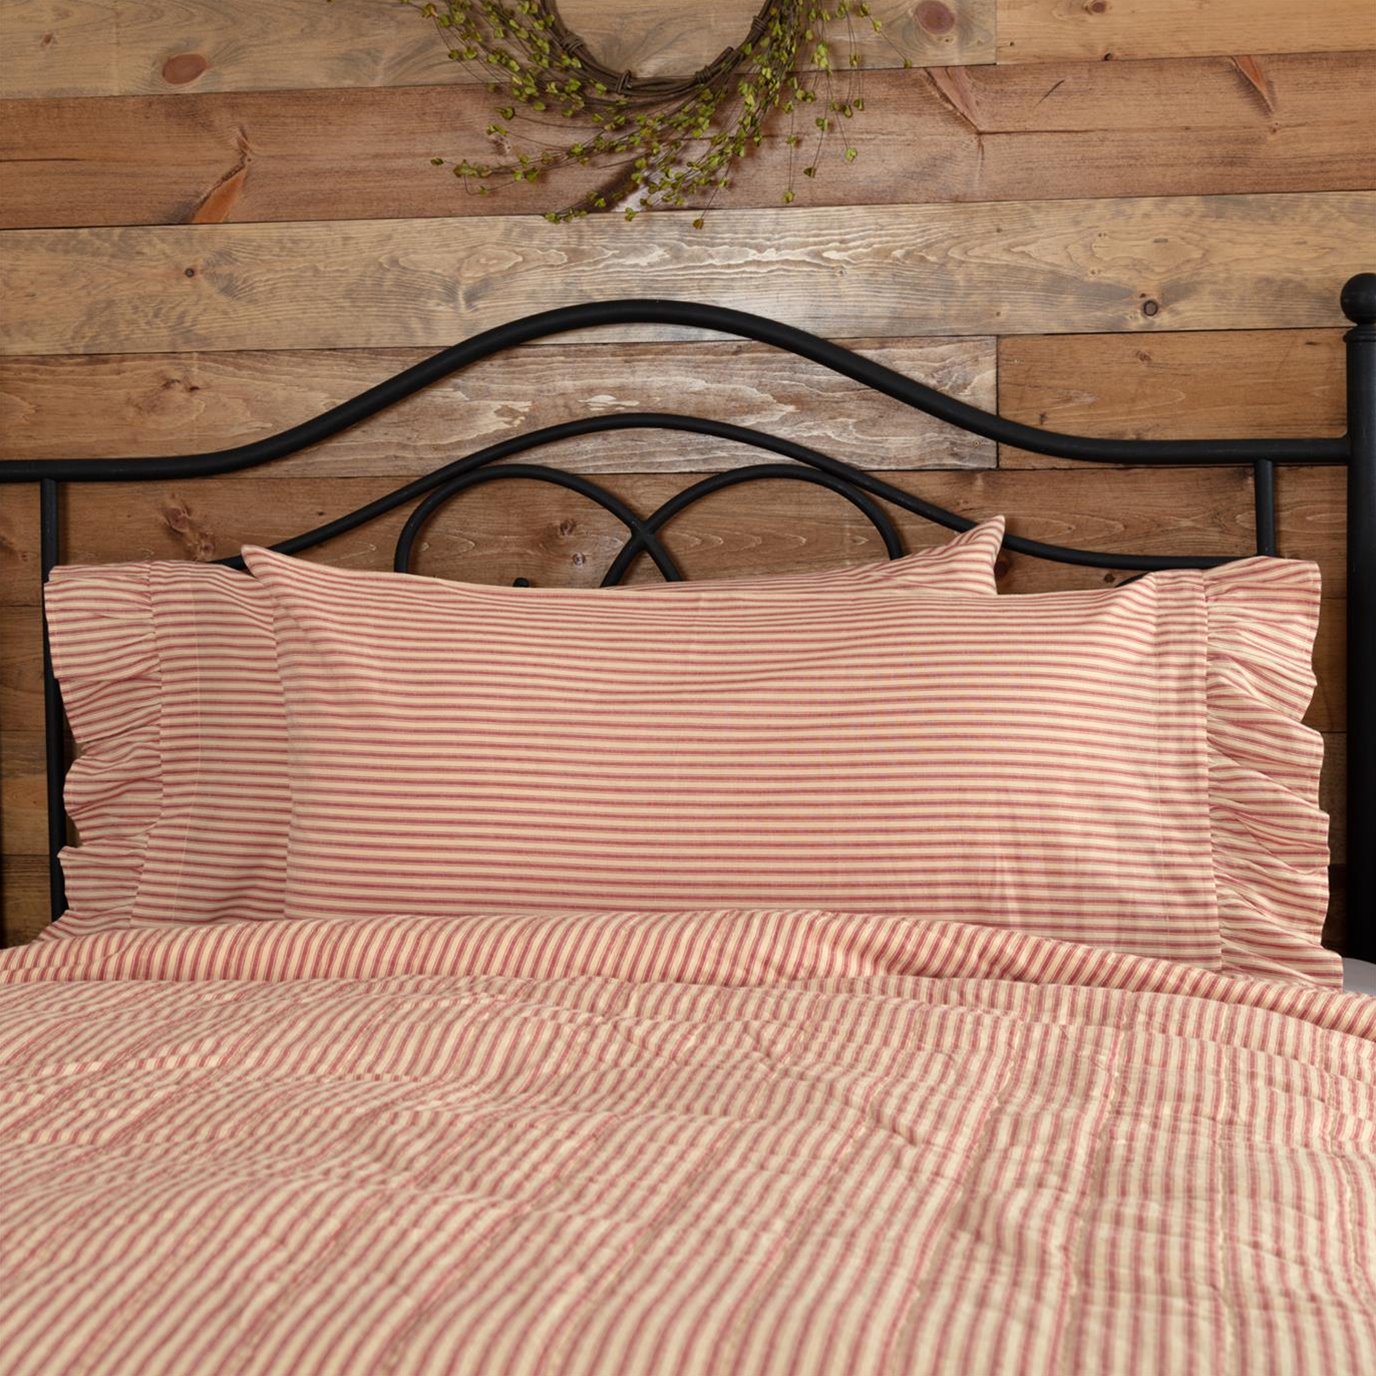 Sawyer Mill Red Ticking Stripe Ruffled King Pillow Case Set of 2 21x40